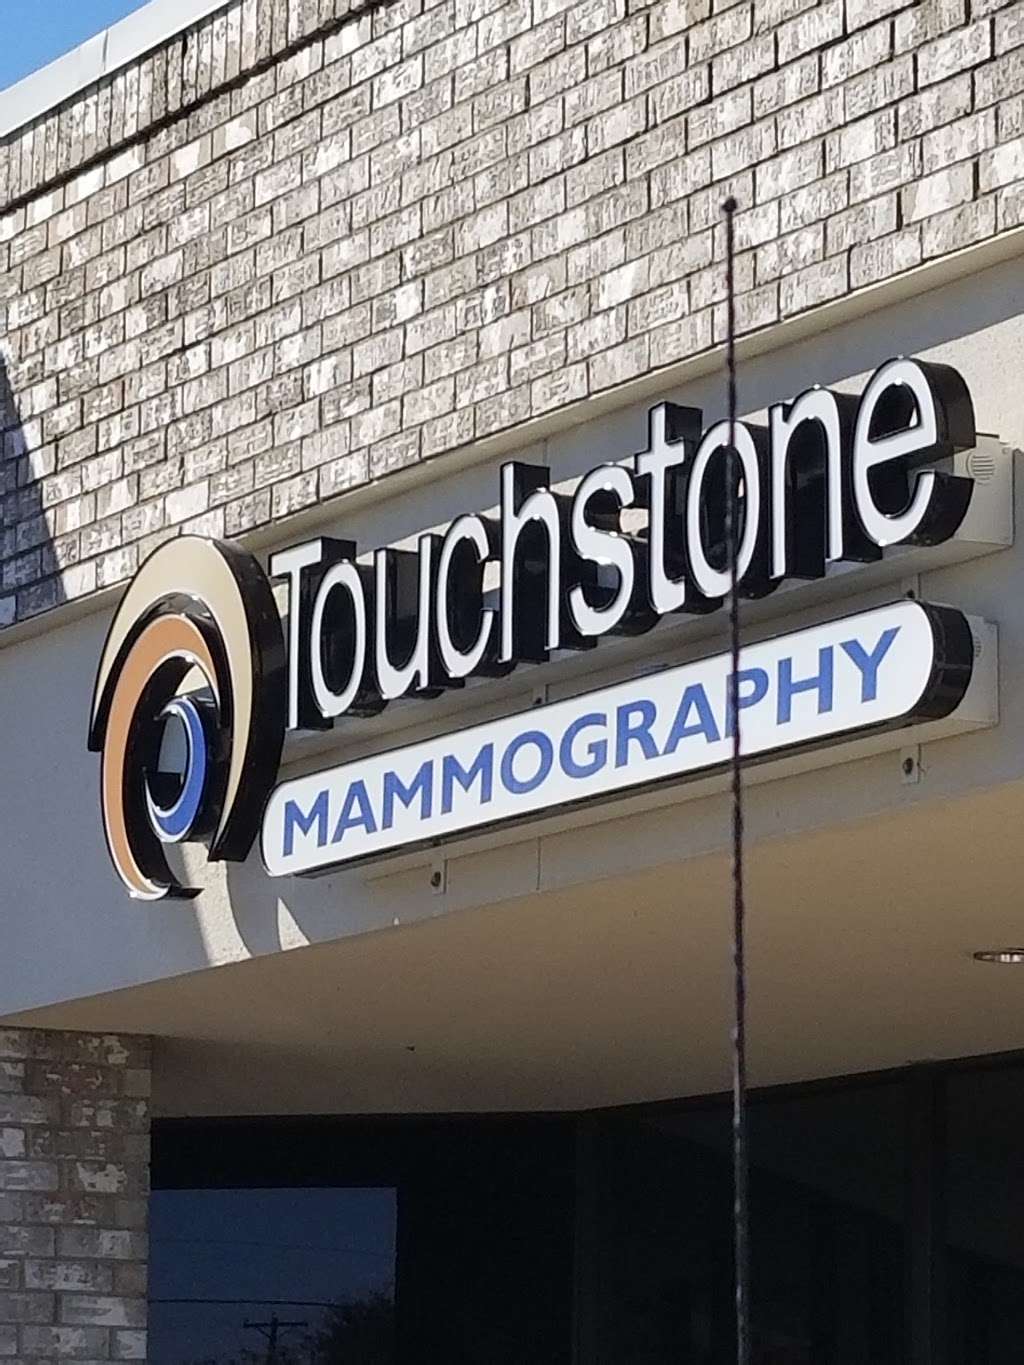 Touchstone Imaging Mesquite | 1425 Gross Rd #130, Mesquite, TX 75149, USA | Phone: (972) 289-5558